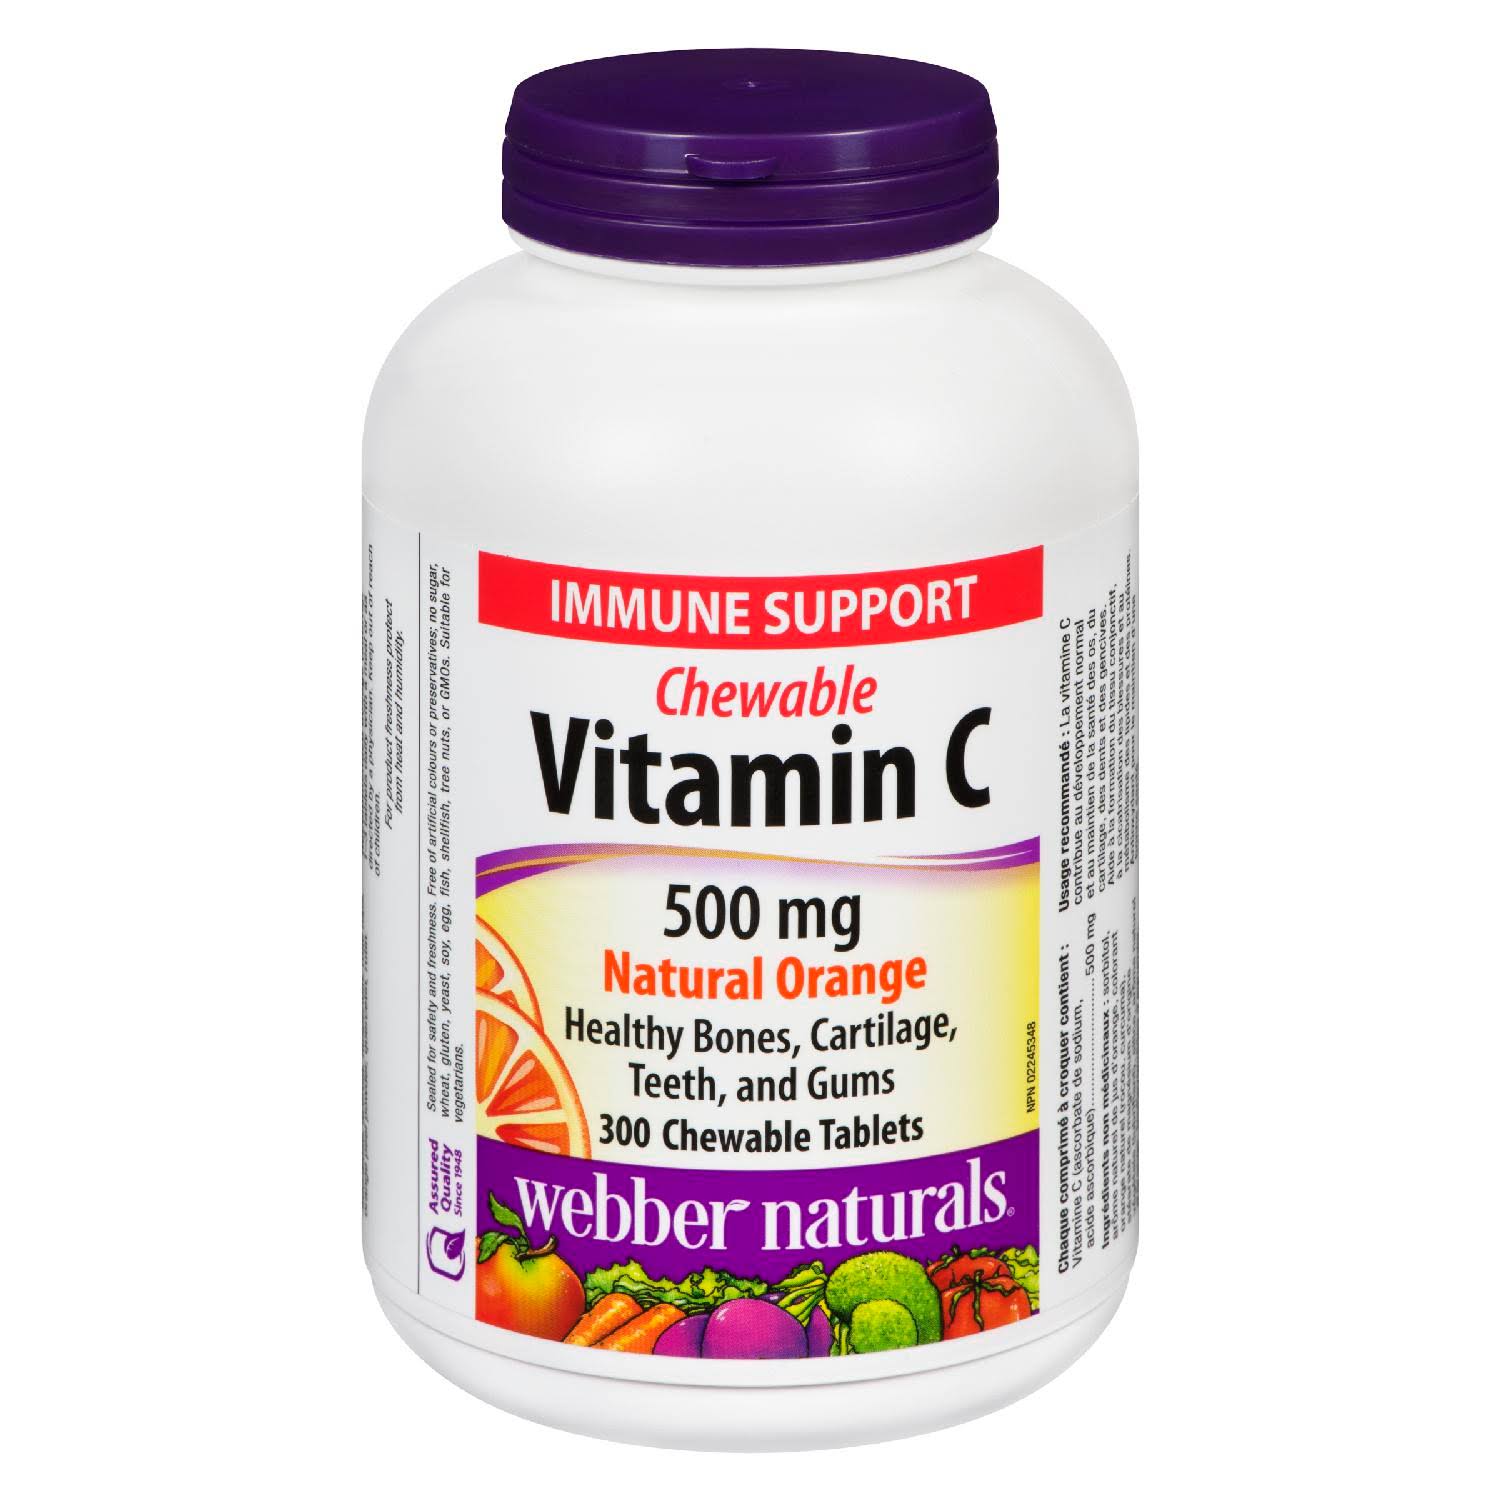 Webber Naturals Vitamin C Chewable 500 Mg Supplement - 300ct